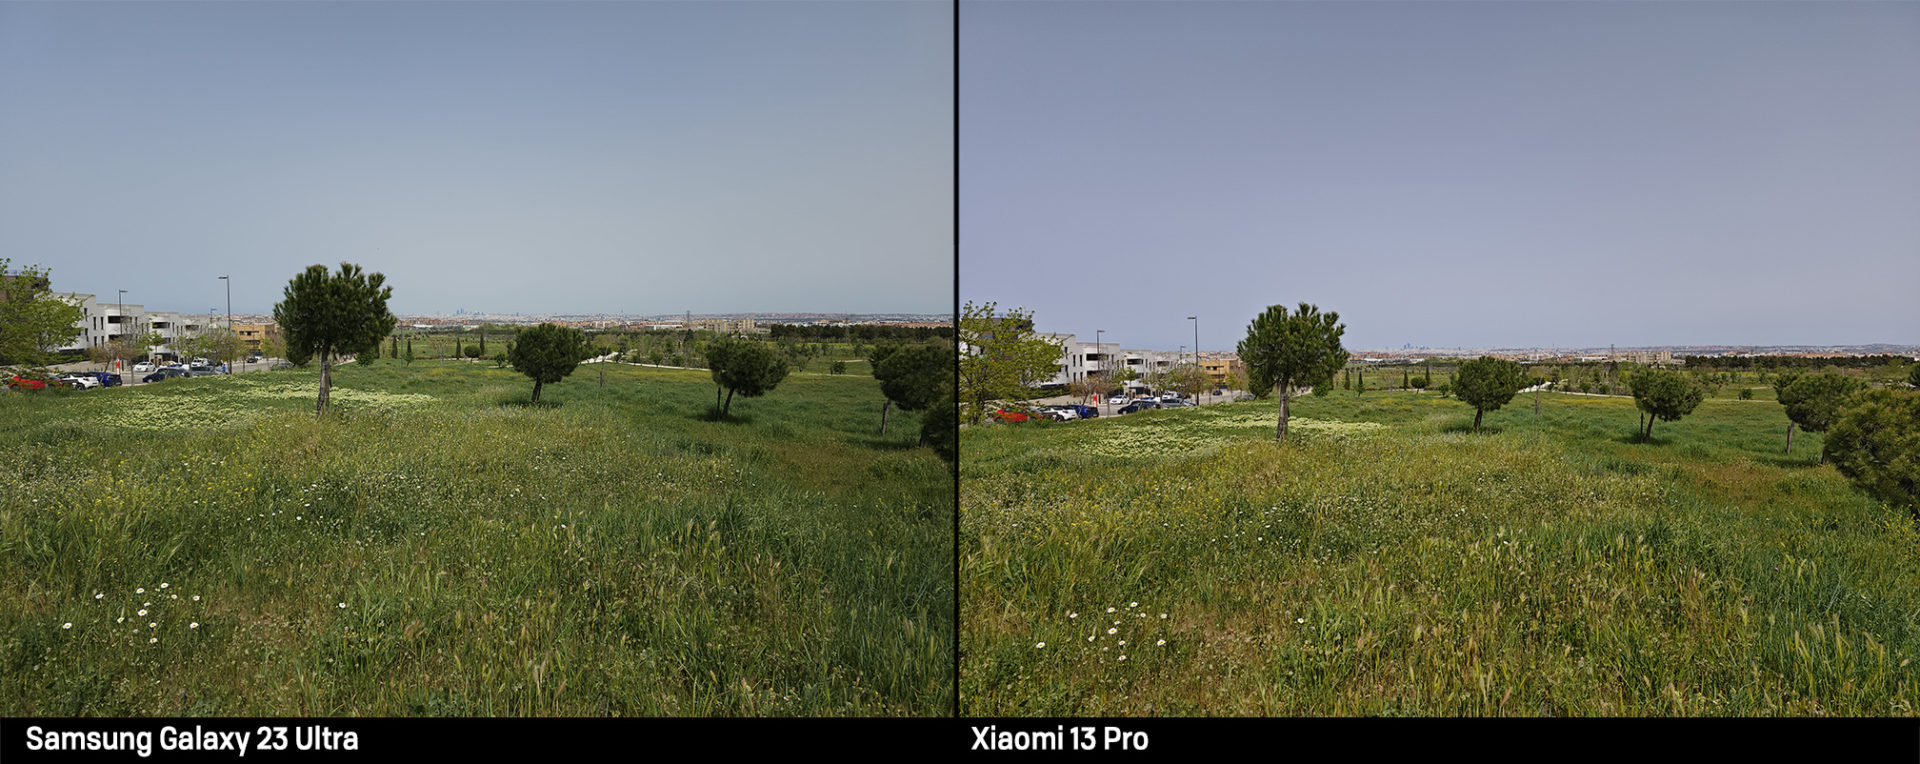 Comparativa foto paisaje Samsung S23 Ultra y Xiaomi 13 Pro